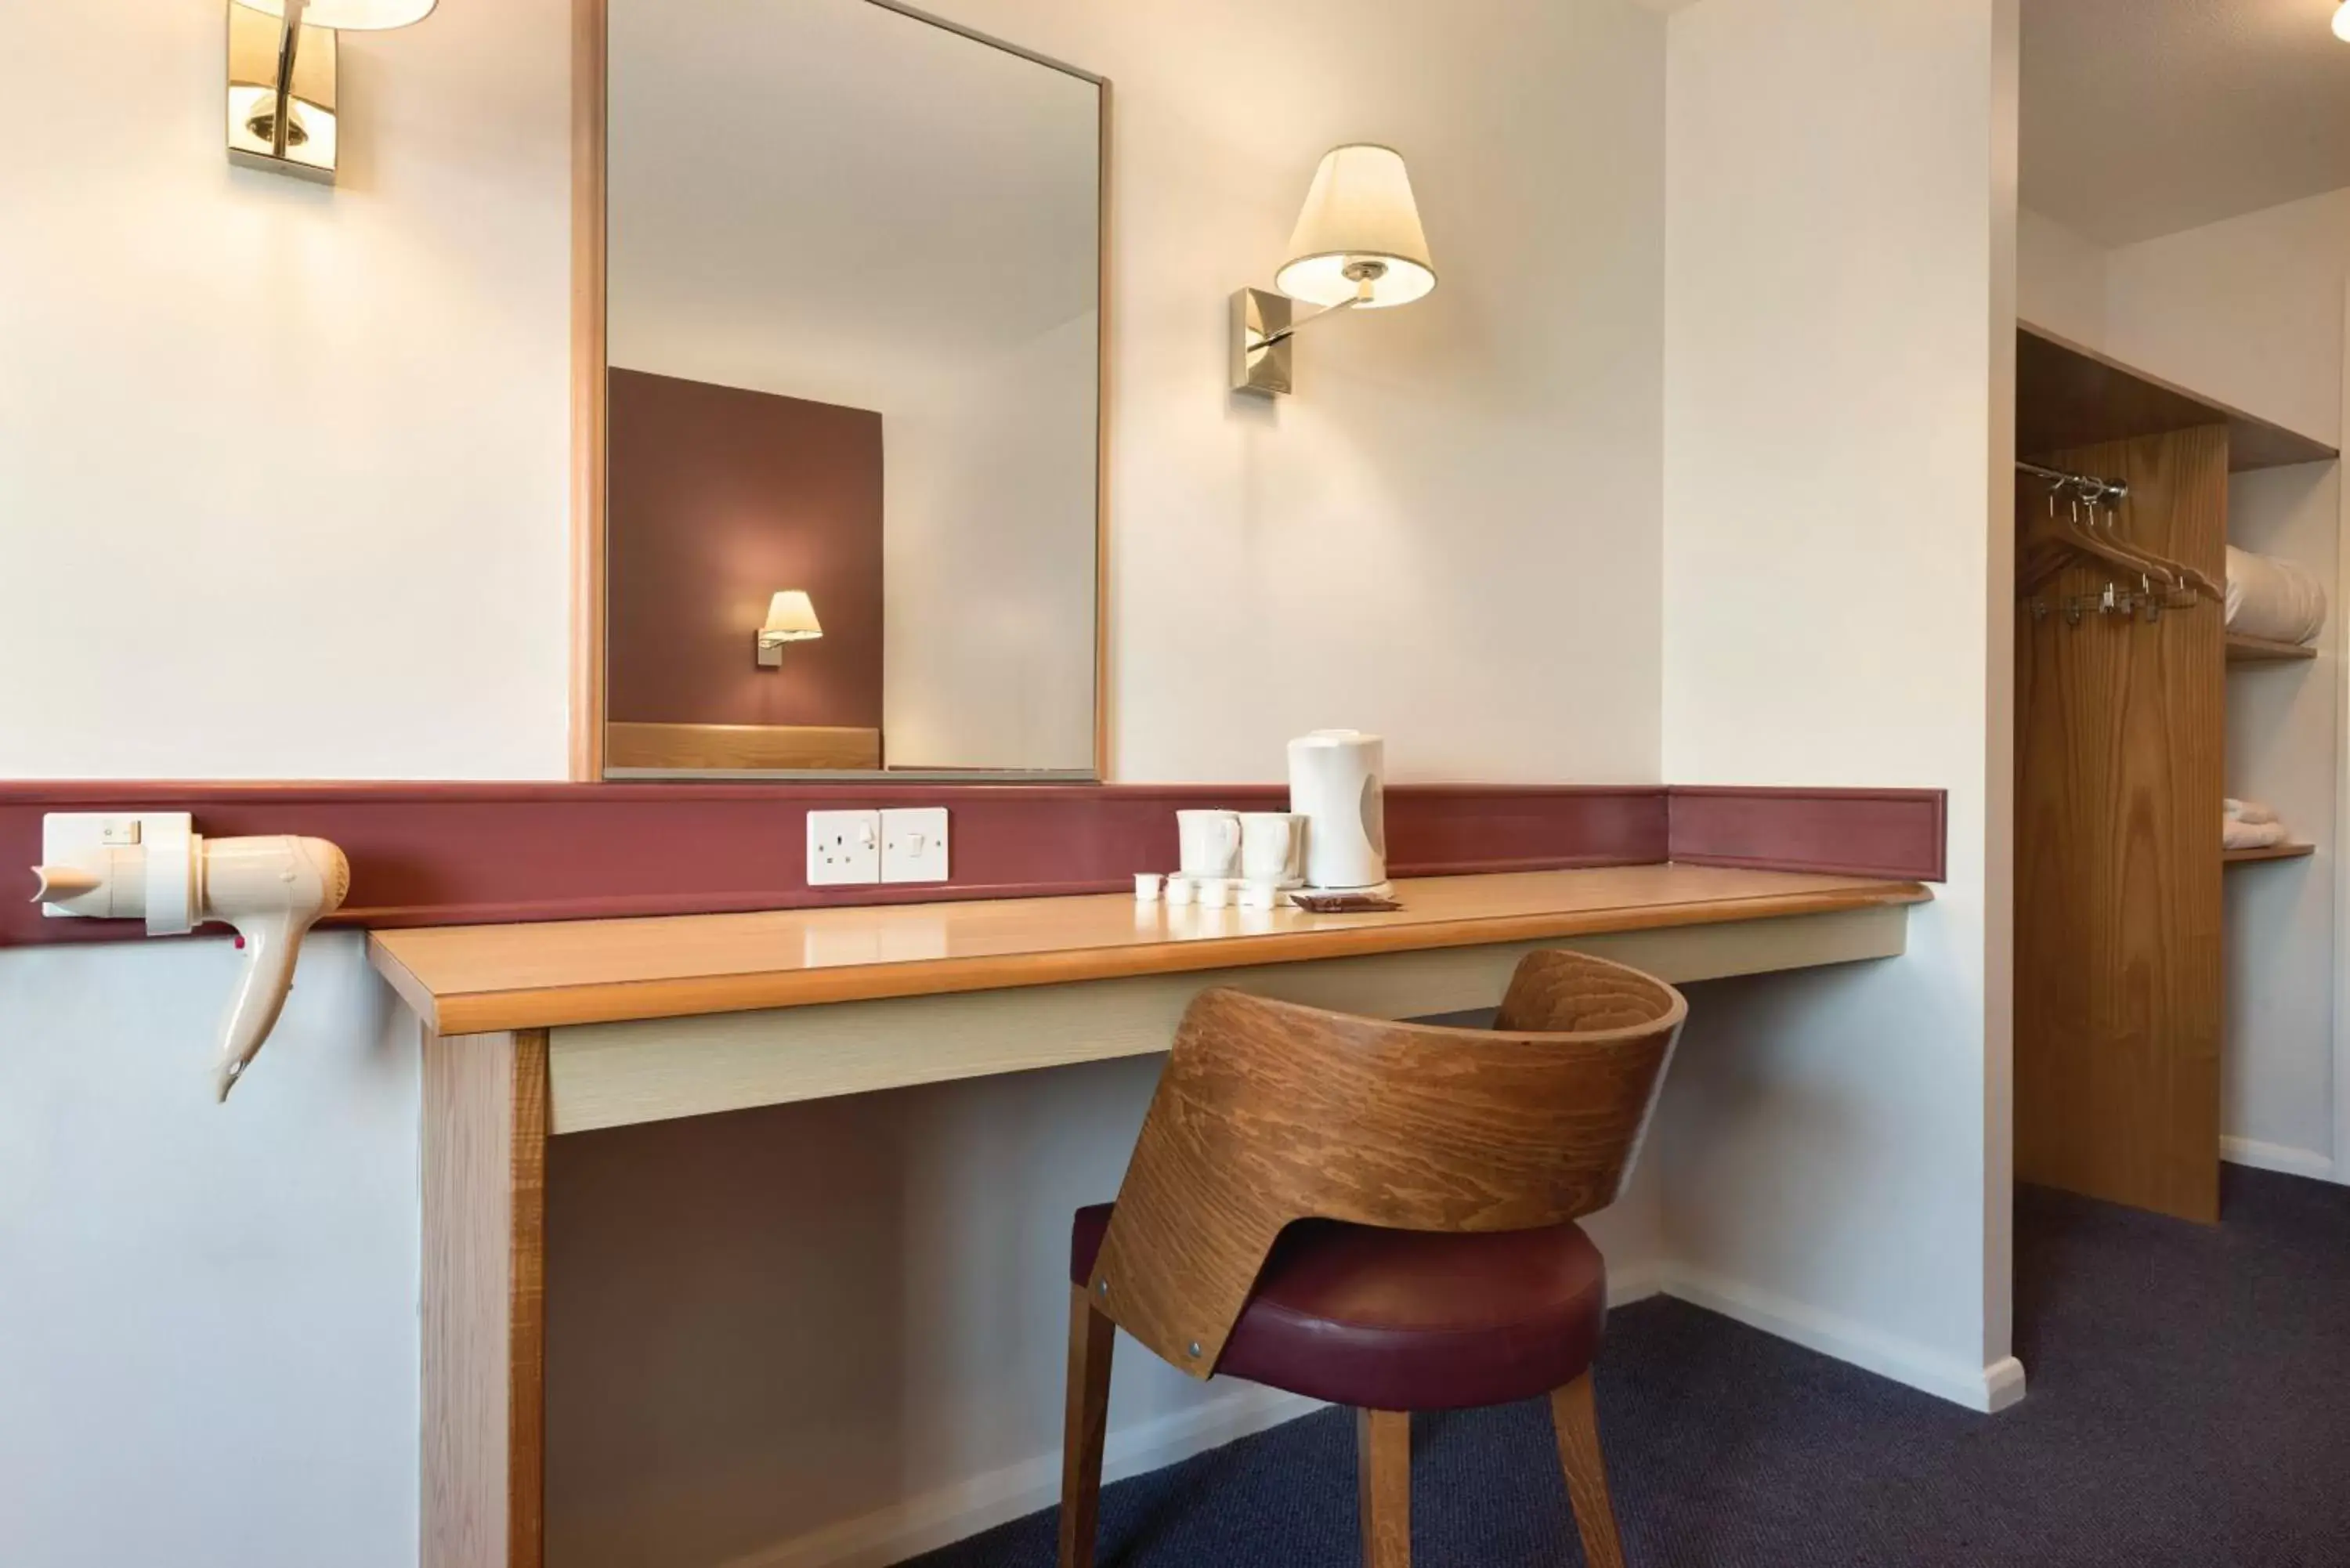 Coffee/tea facilities, Bathroom in Days Inn Hotel Membury